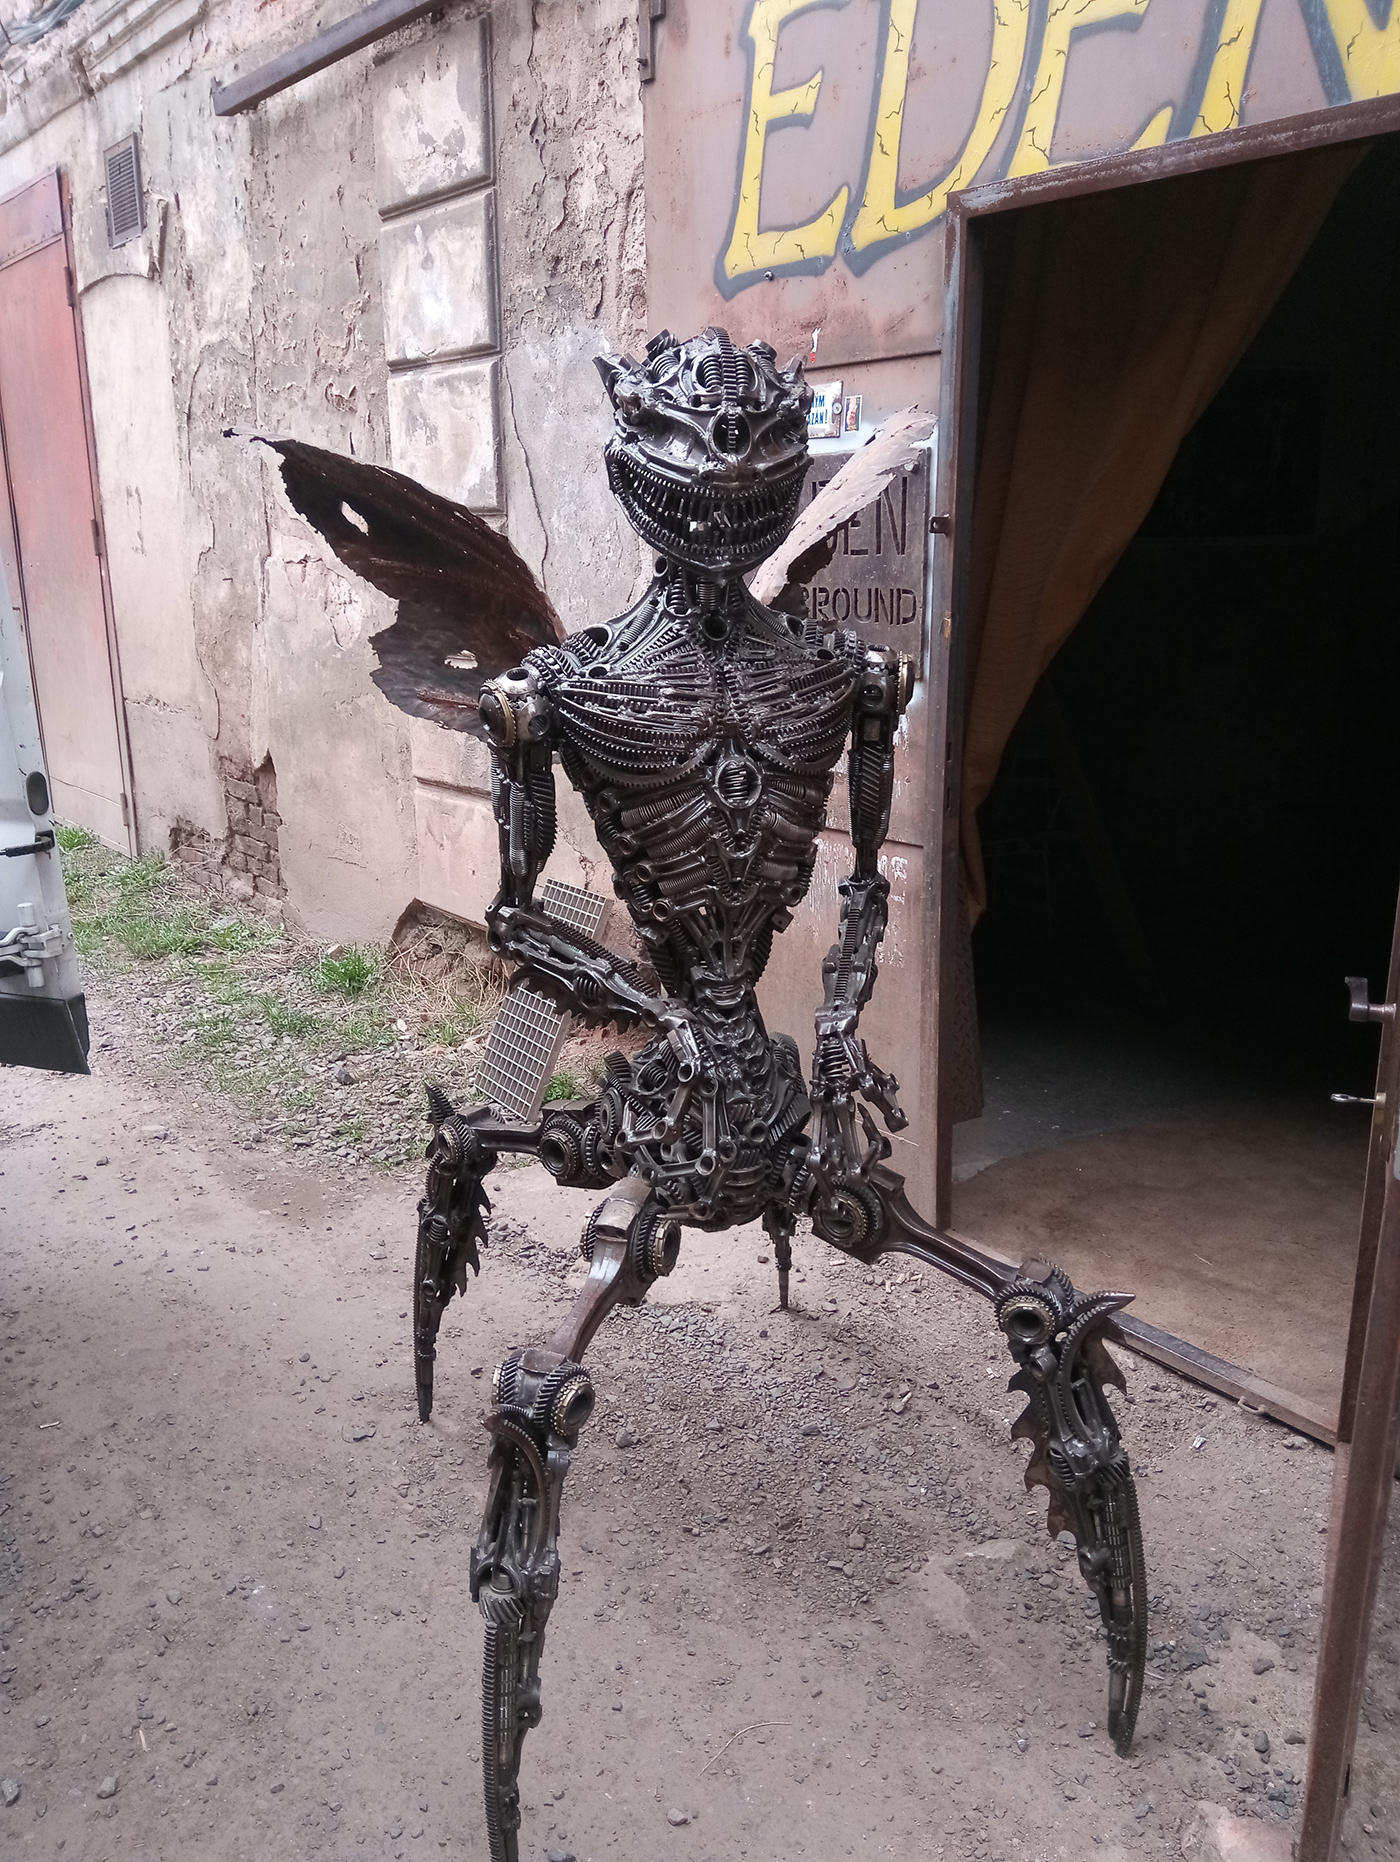 art biomechanic creature Cyberpunk dieselpunk ironsculpture metalart metalsculpture sculpture STEAMPUNK Toothfairy weldart welding